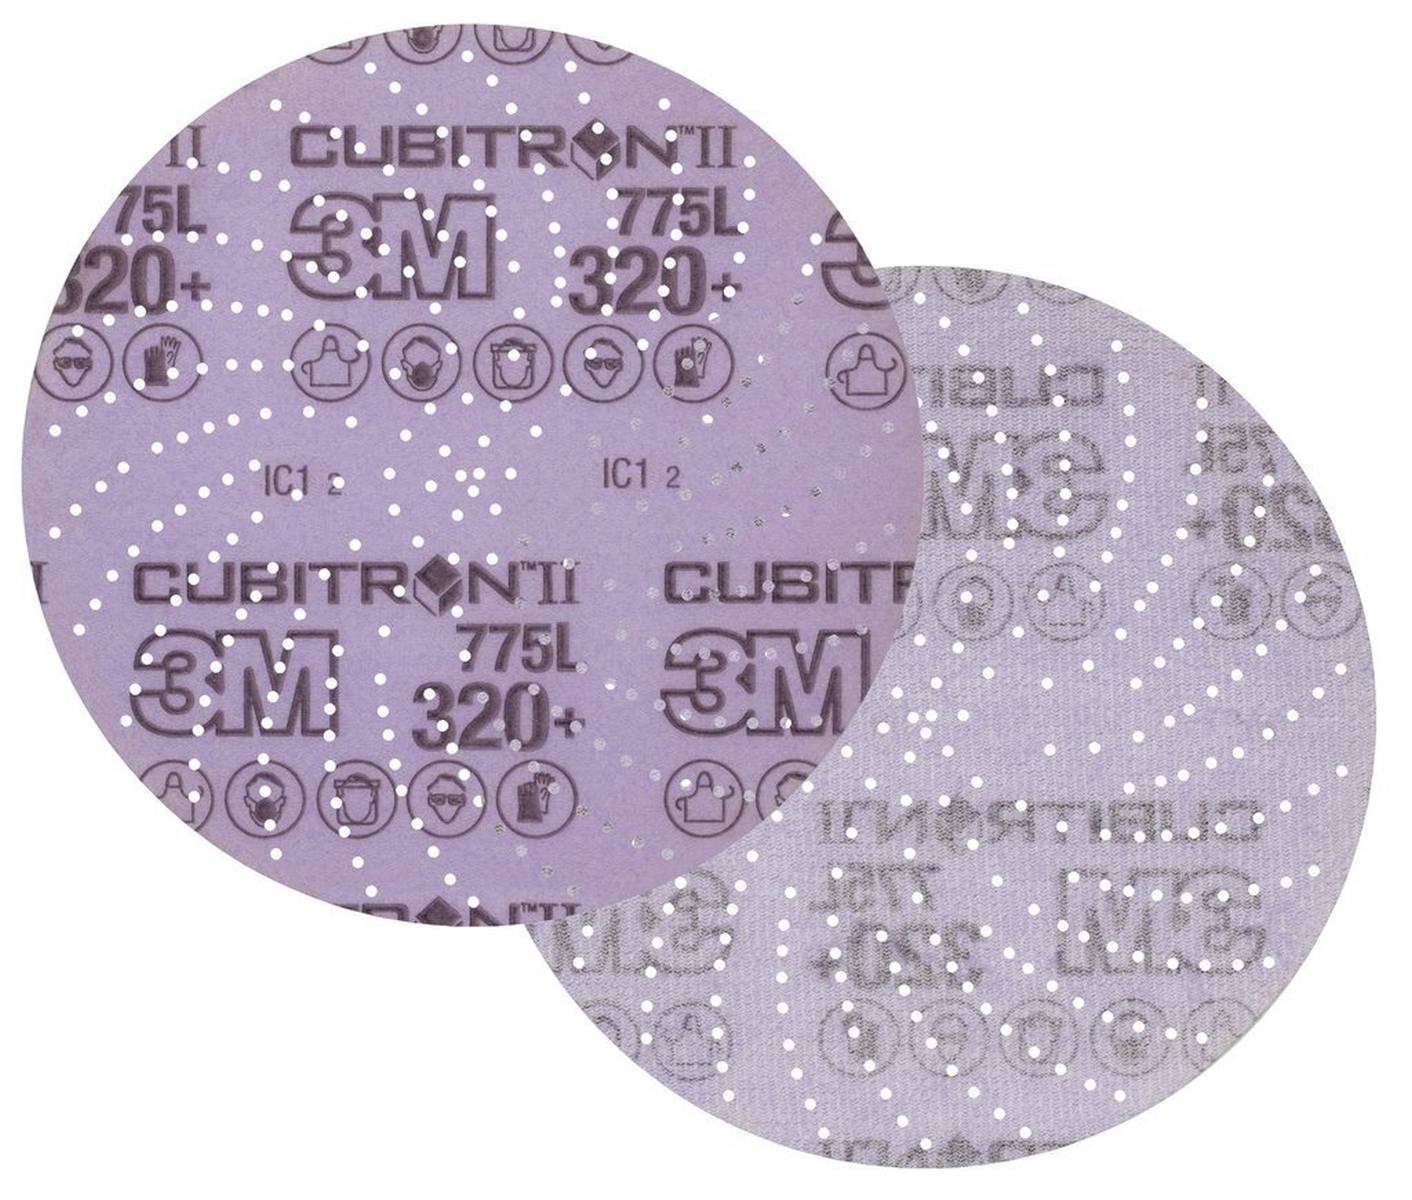 3M Cubitron II Hookit film disk 775L, 150 mm, 320 , multihole #47082